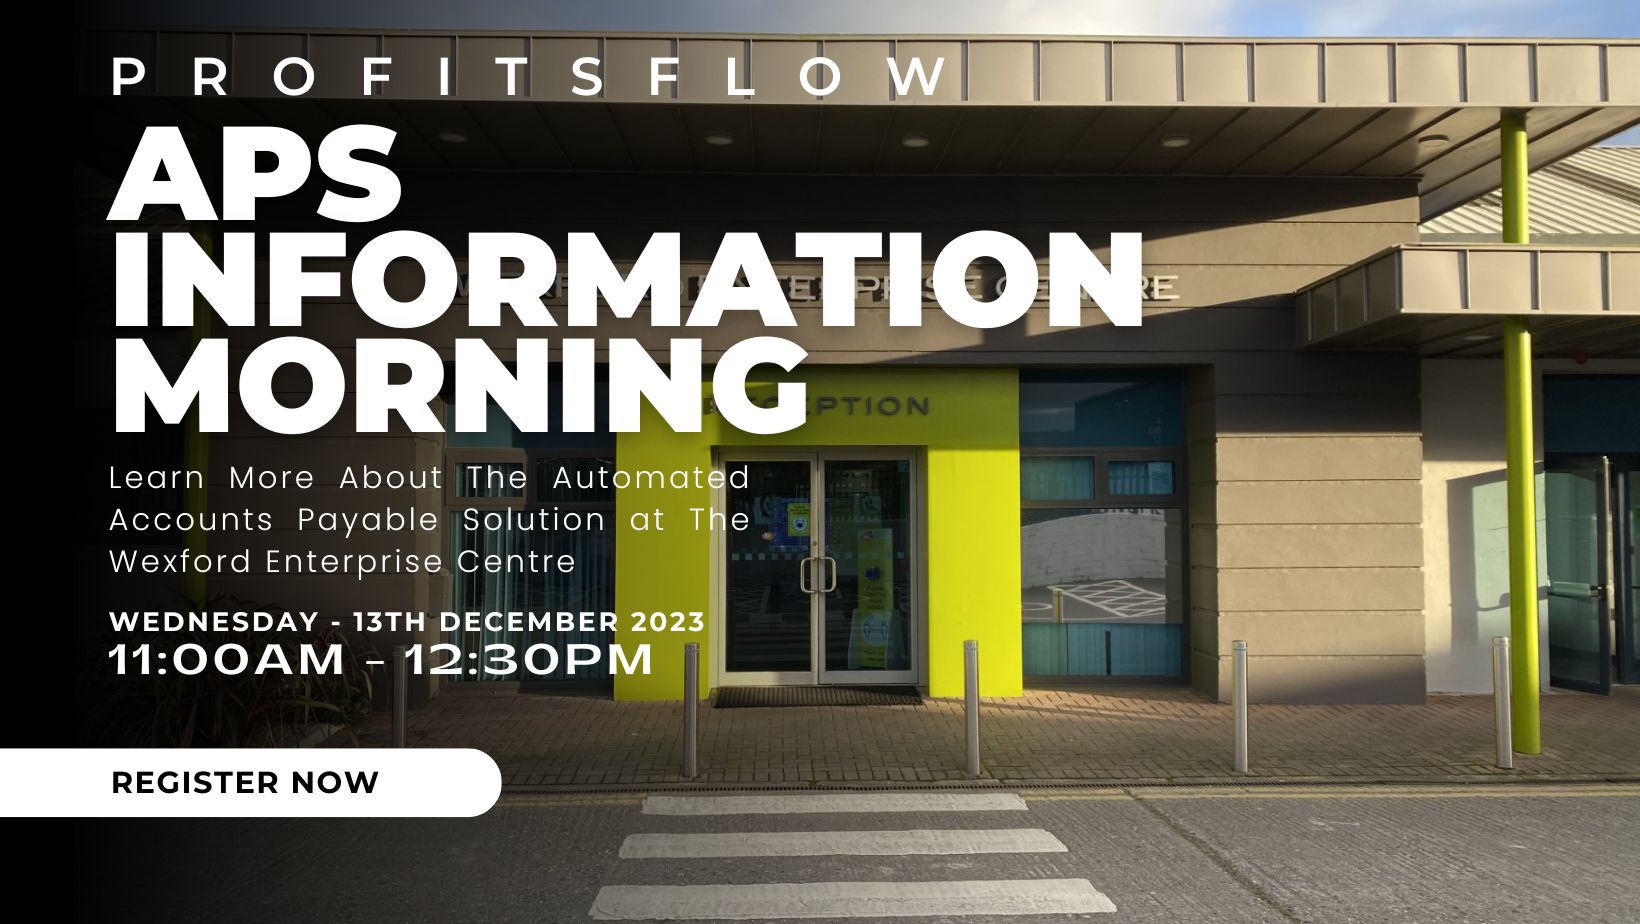 Profitsflow APS Information Morning - Wexford